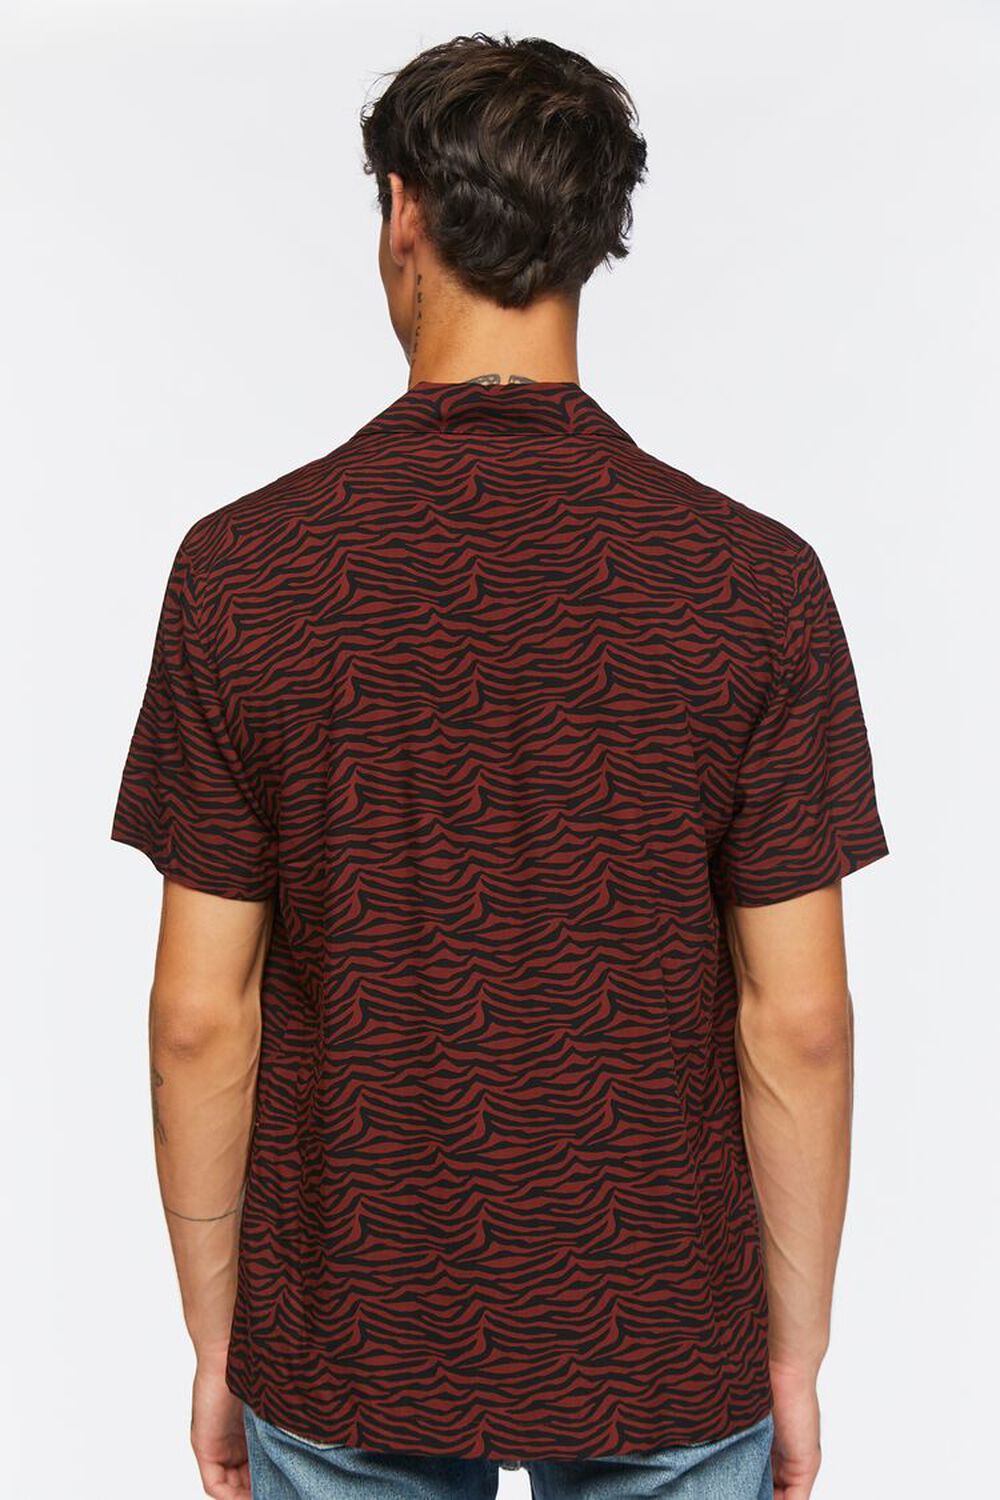 BROWN/MULTI Abstract Zebra Short-Sleeve Shirt, image 3